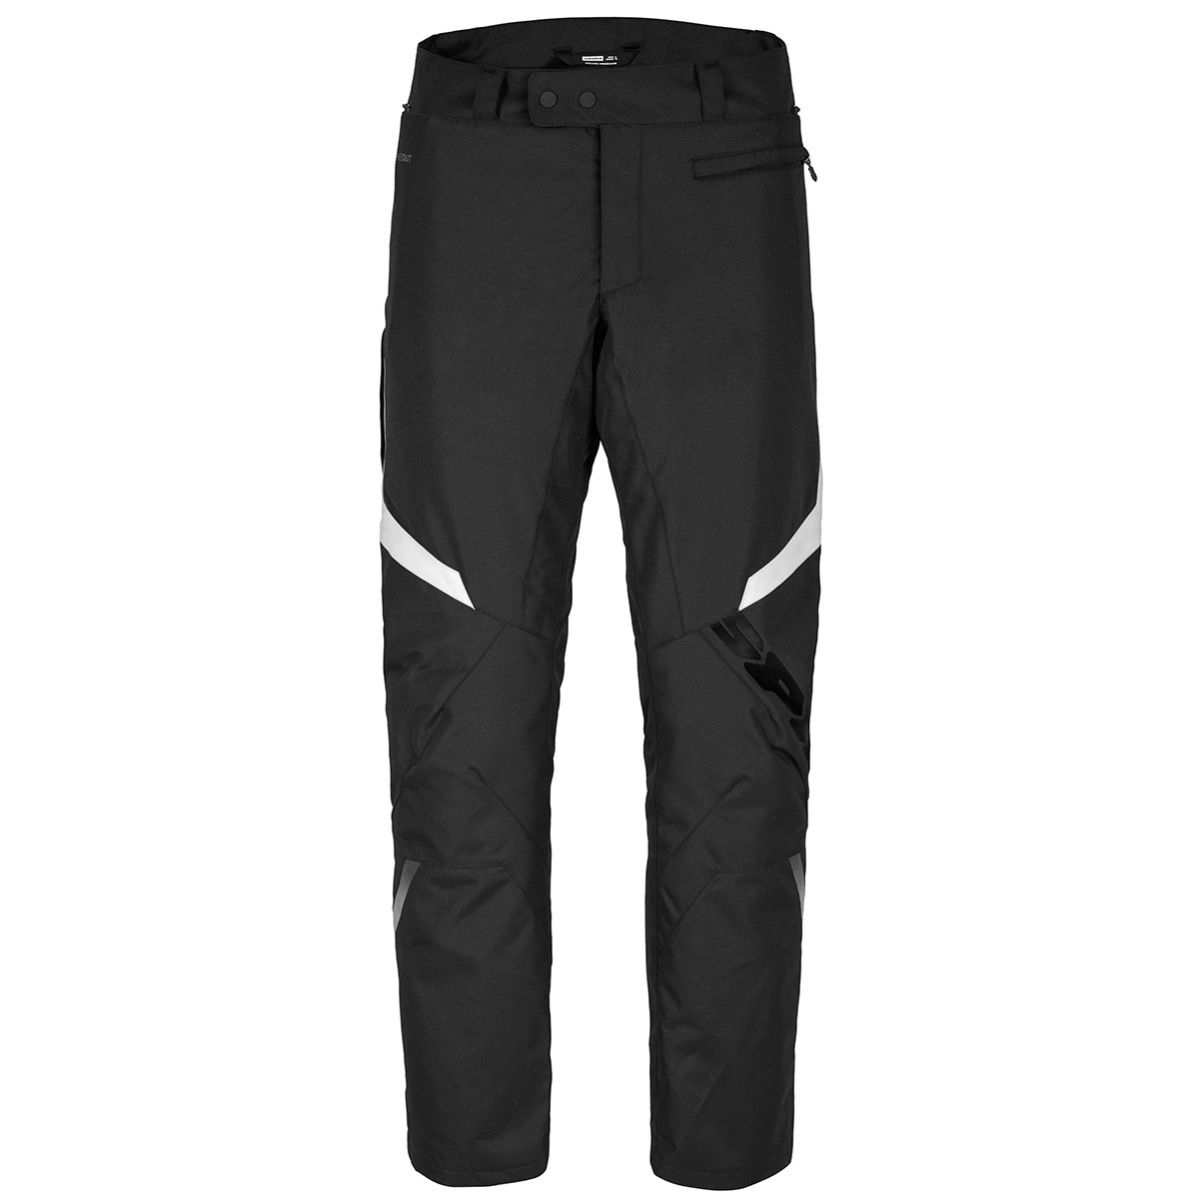 Image of Spidi Sportmaster Pants Black White Size L ID 8030161478136